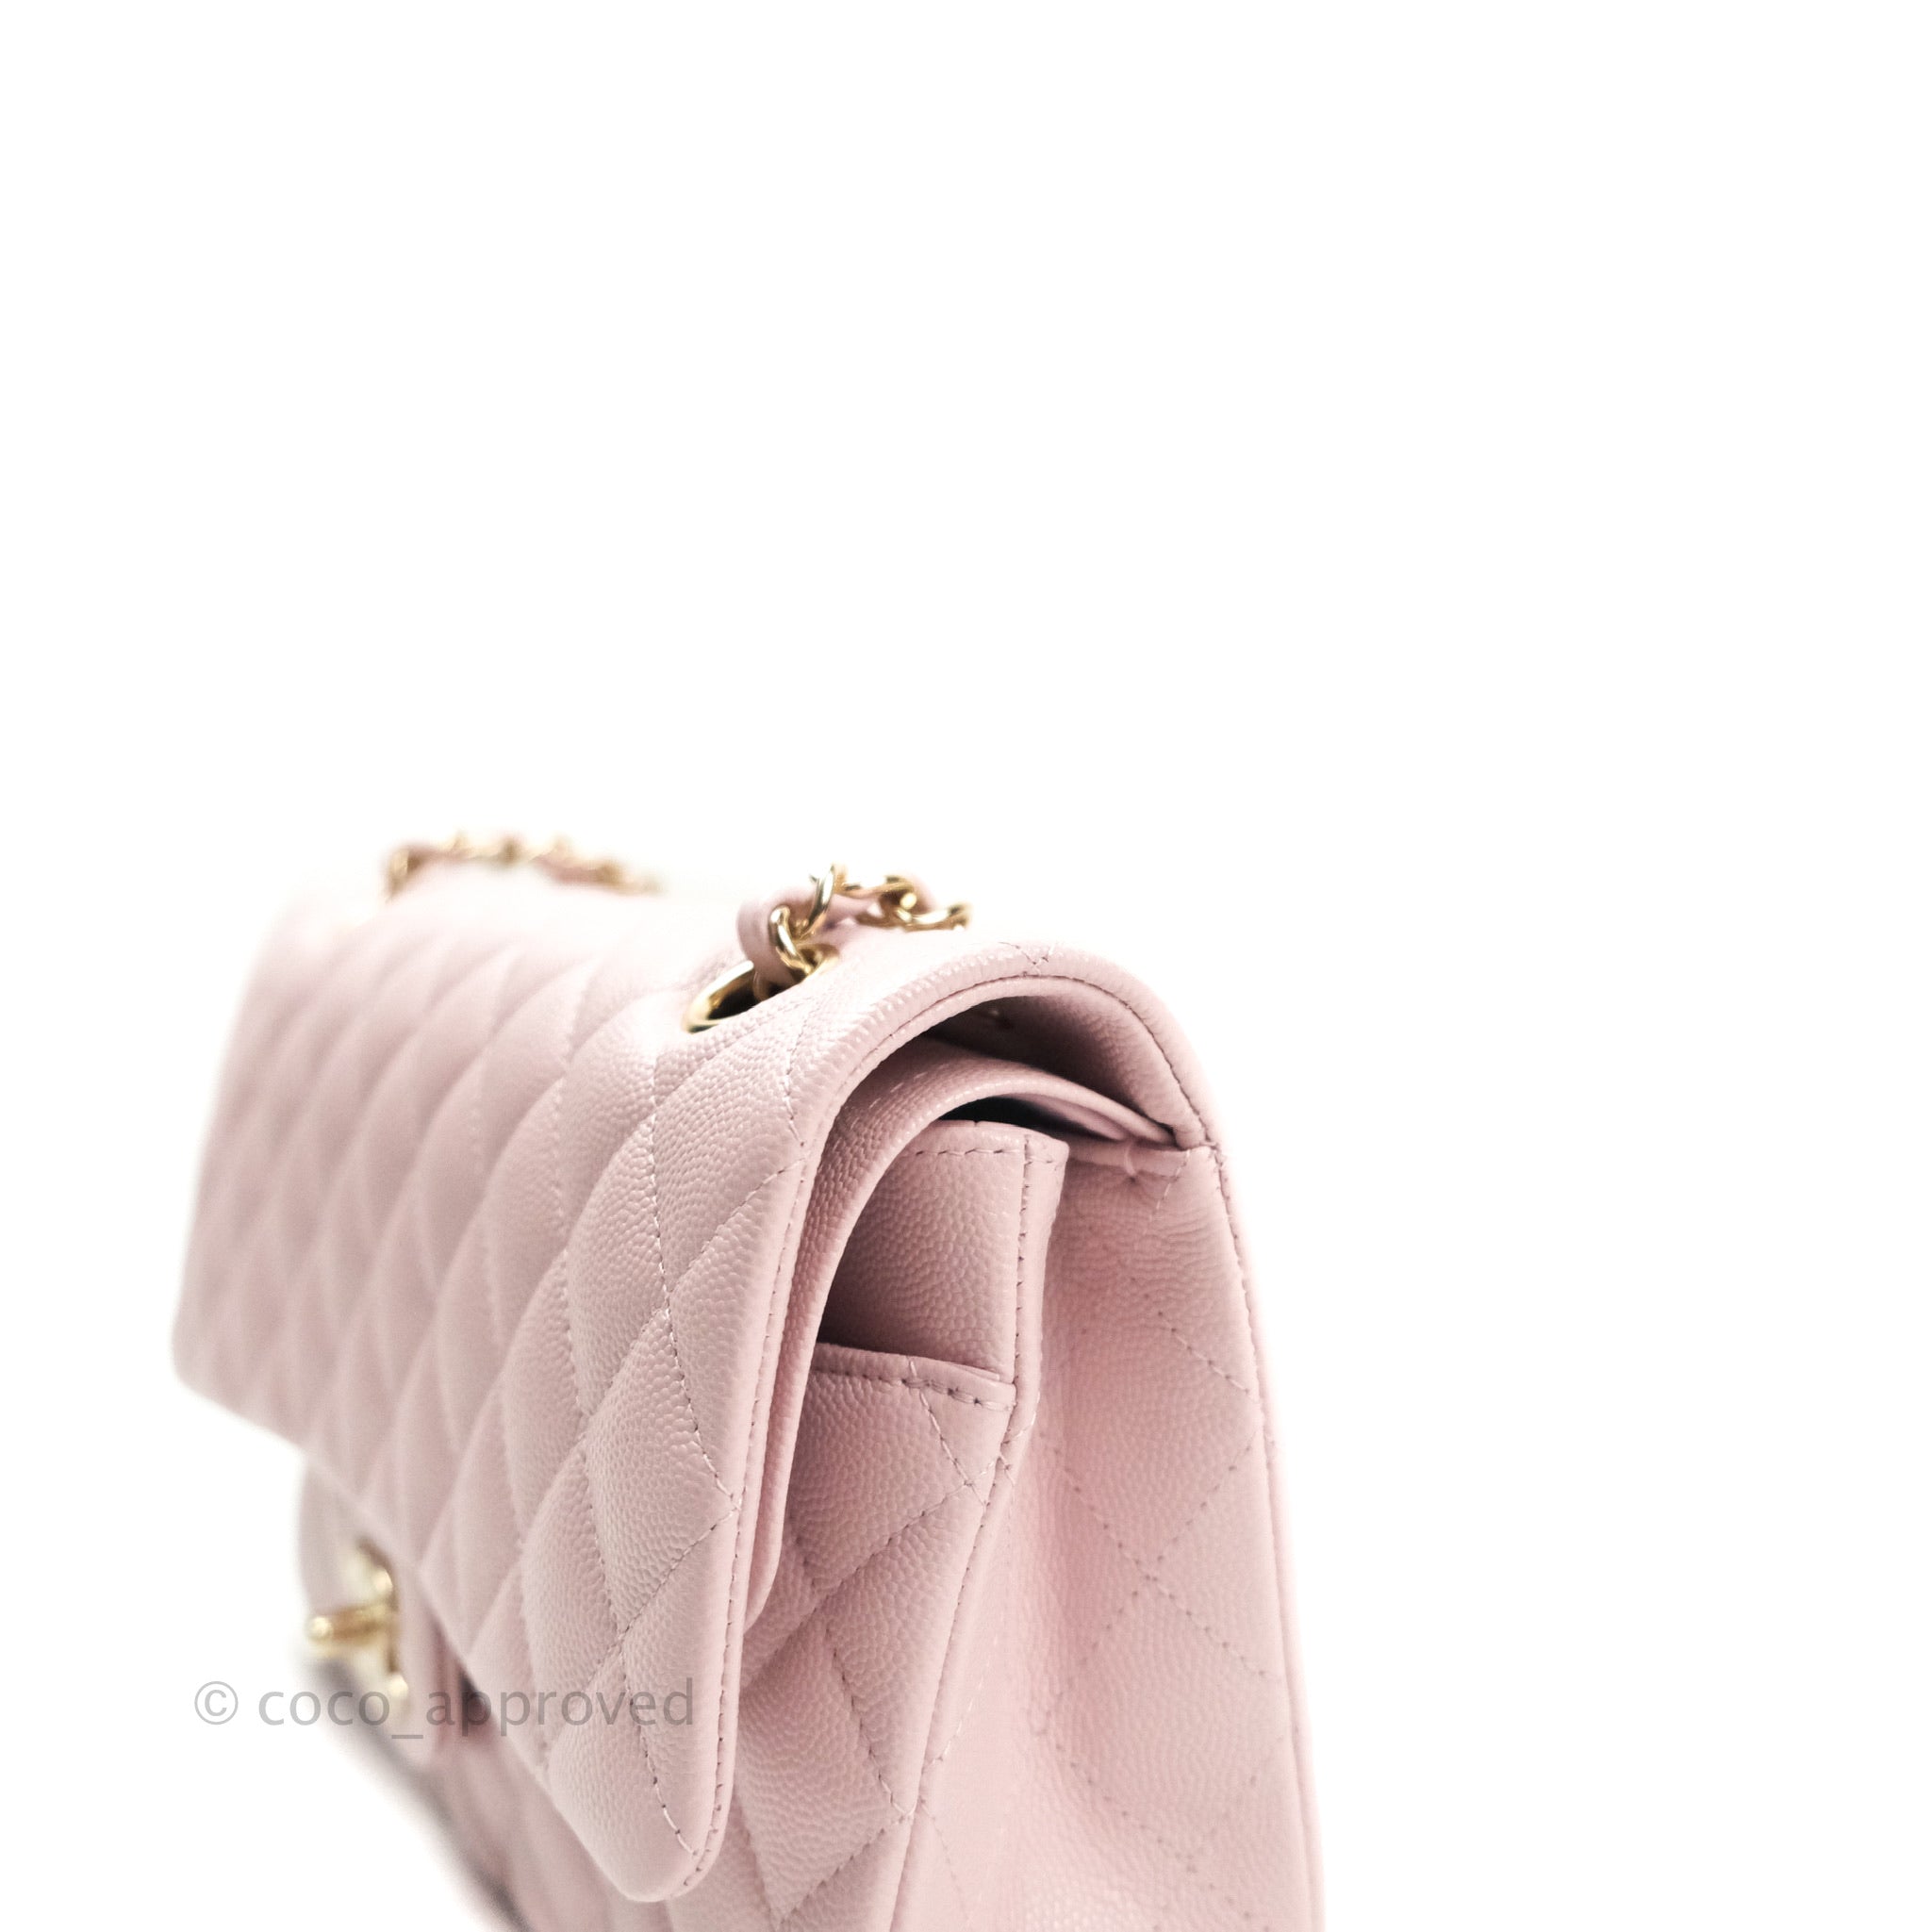 Chanel Classic Medium Double Flap 22B Rose Clair/Light Pink